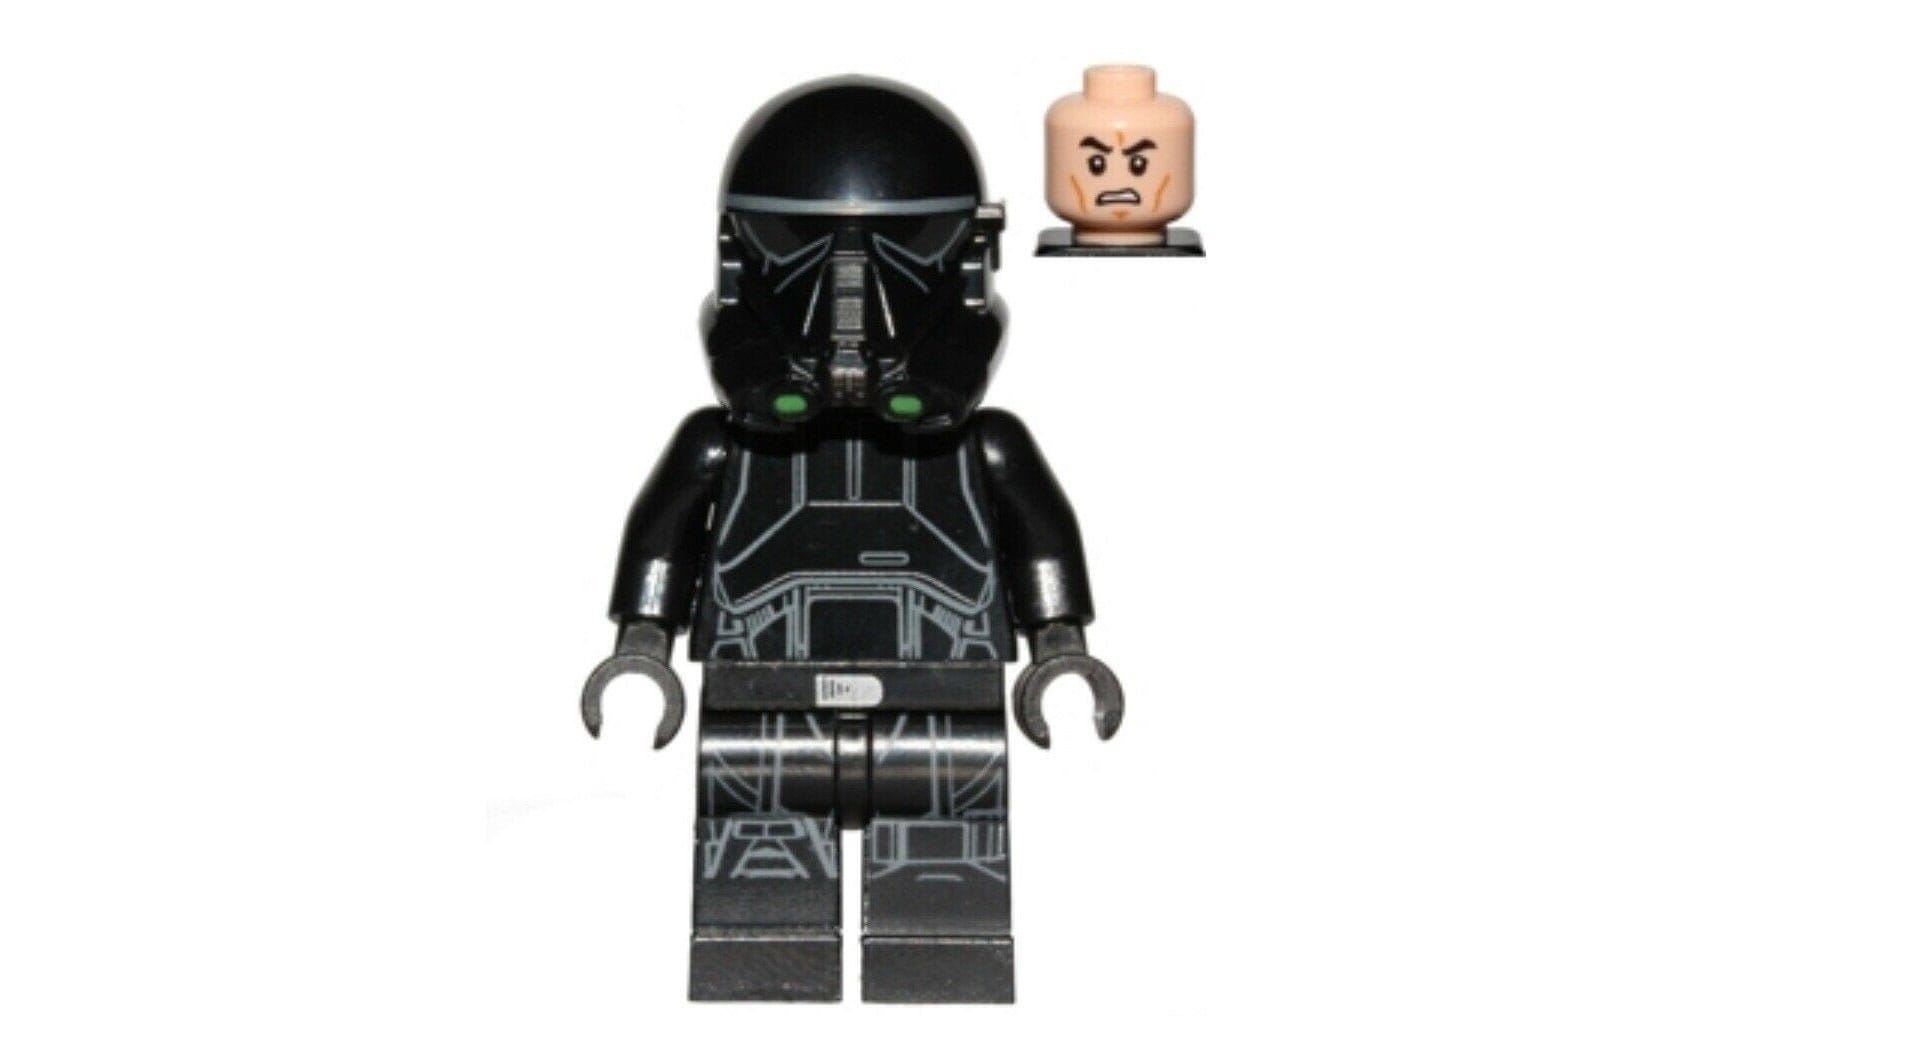 Imperial Death TROOPER Lego Star Wars MINIFIGURE - Etsy